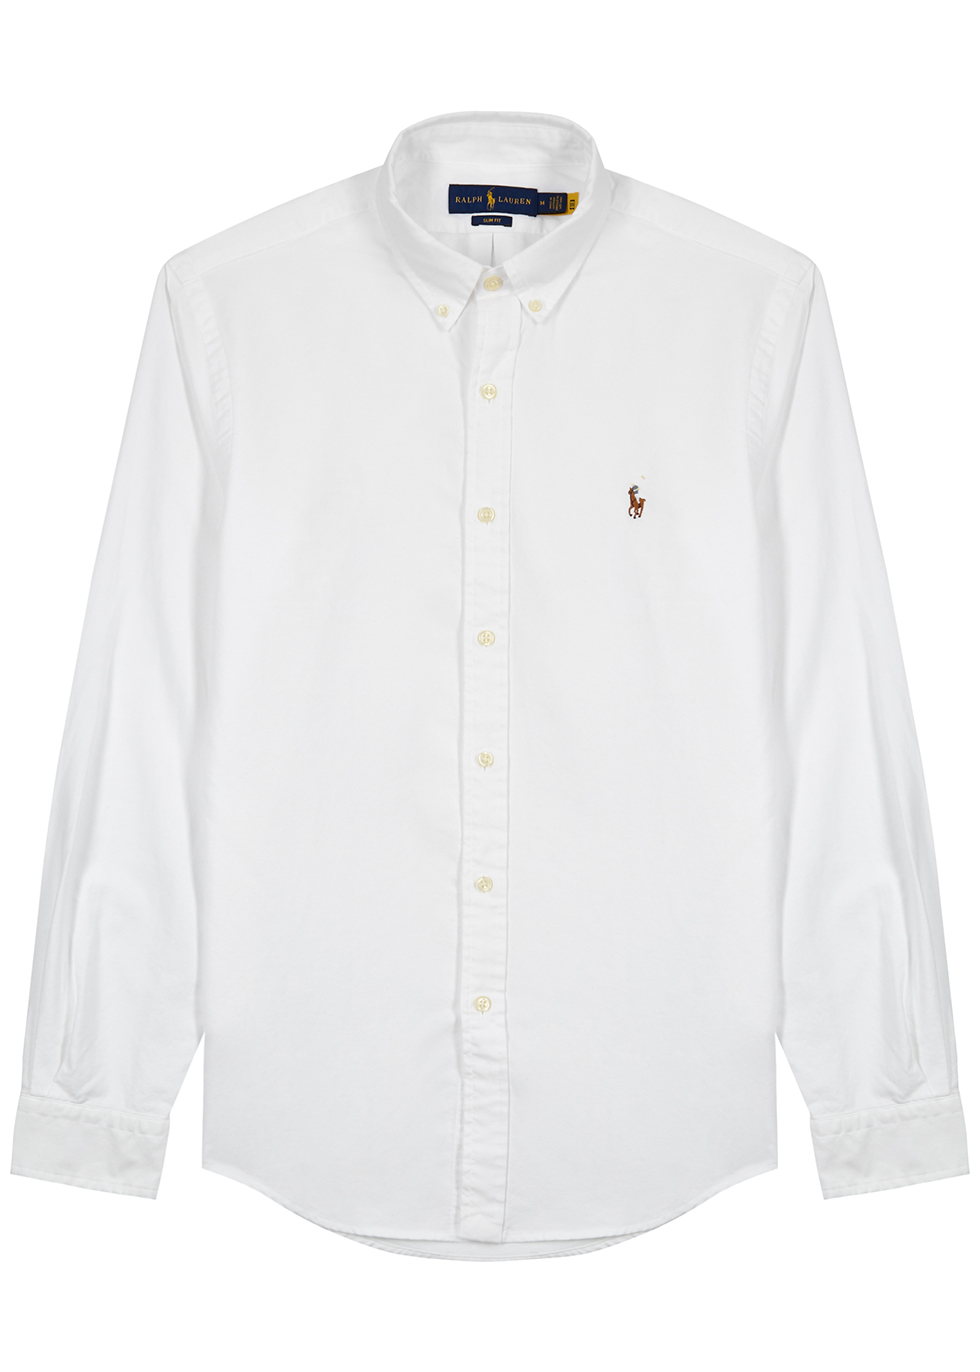 polo ralph lauren white oxford shirt